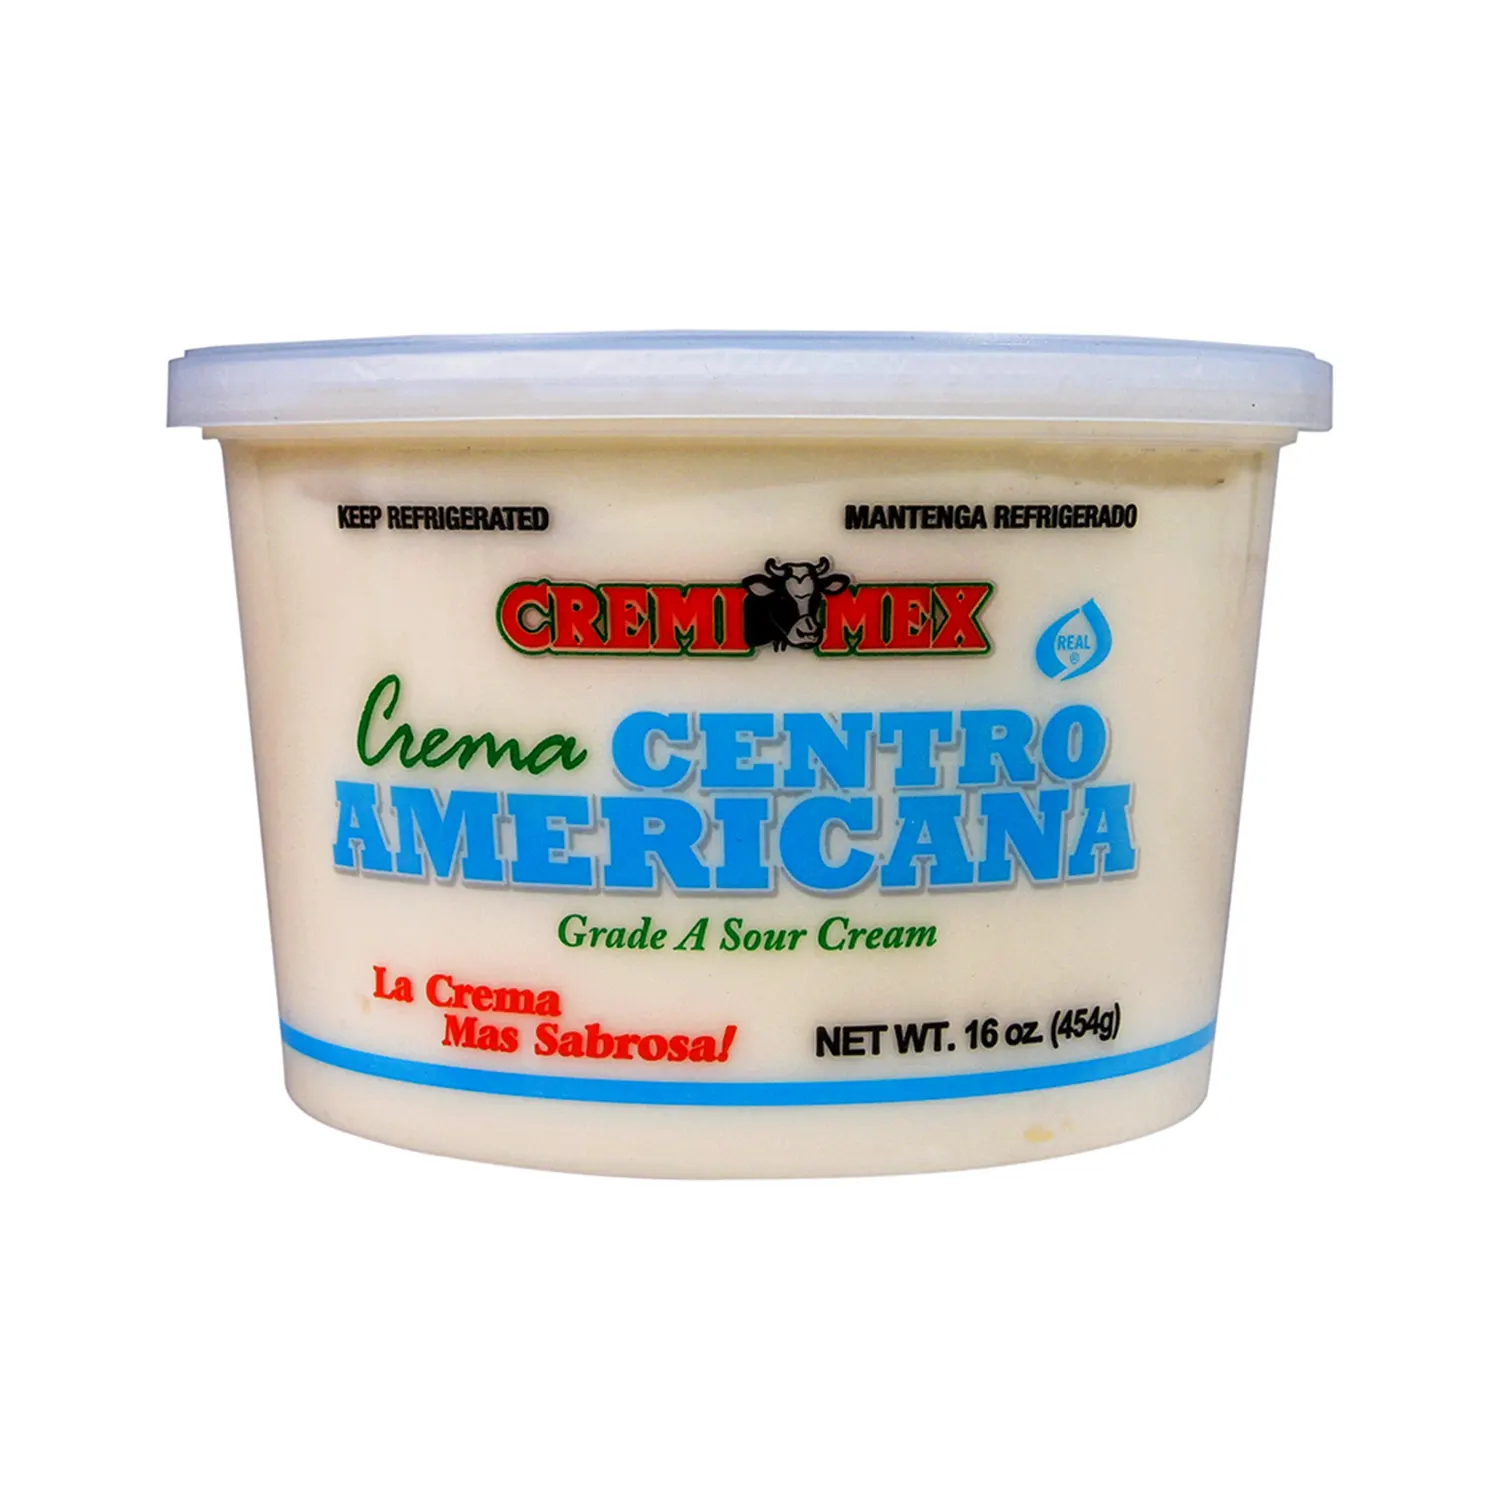 CREMIMEX Crema Centro Americana Cup 12 16 oz